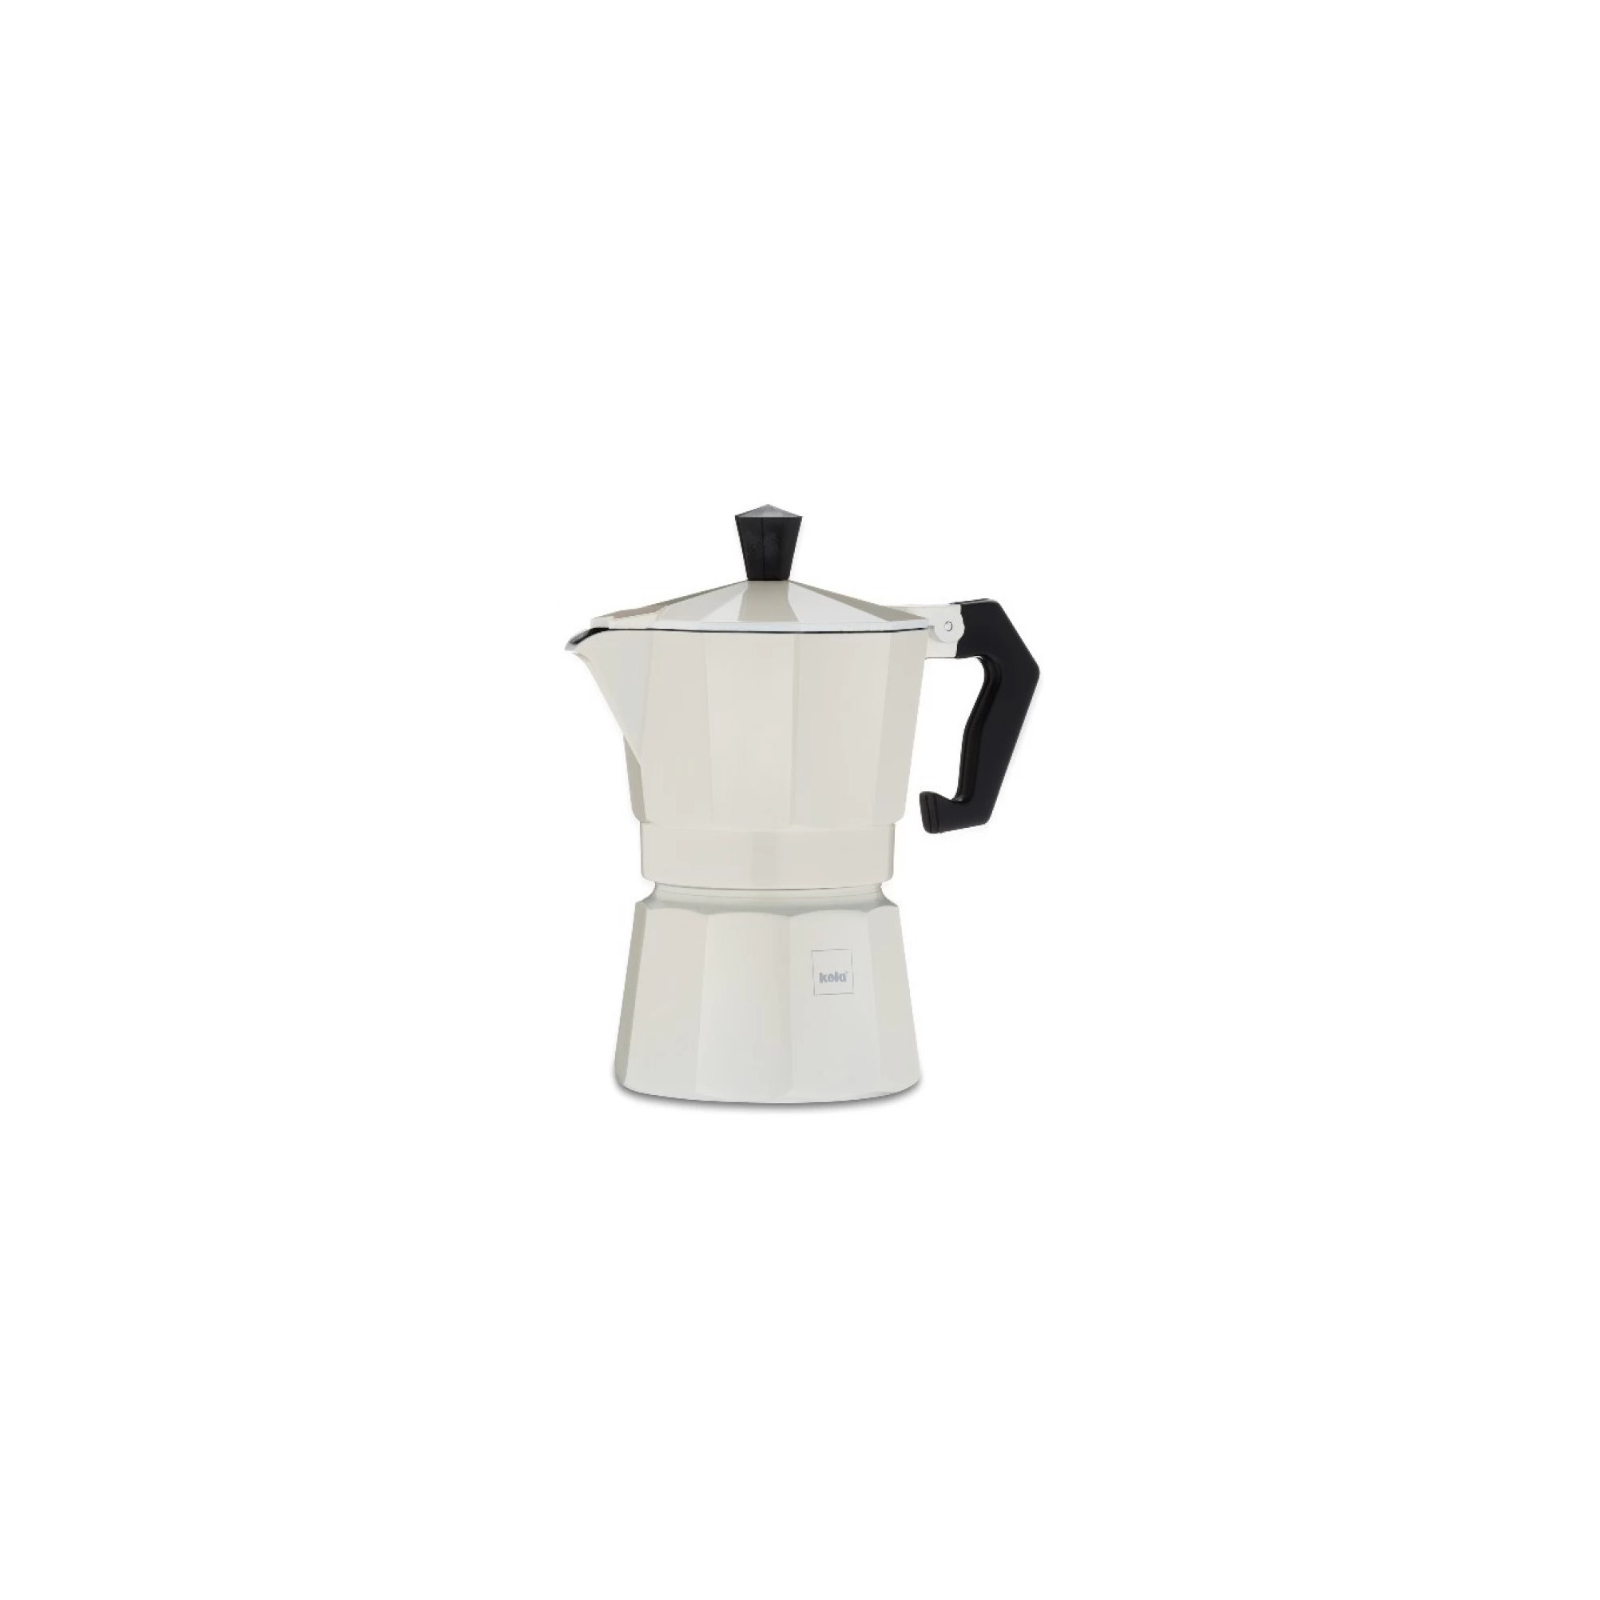 Гейзерная кофеварка Kela Italia 150 мл 3 Cap Black (10553)